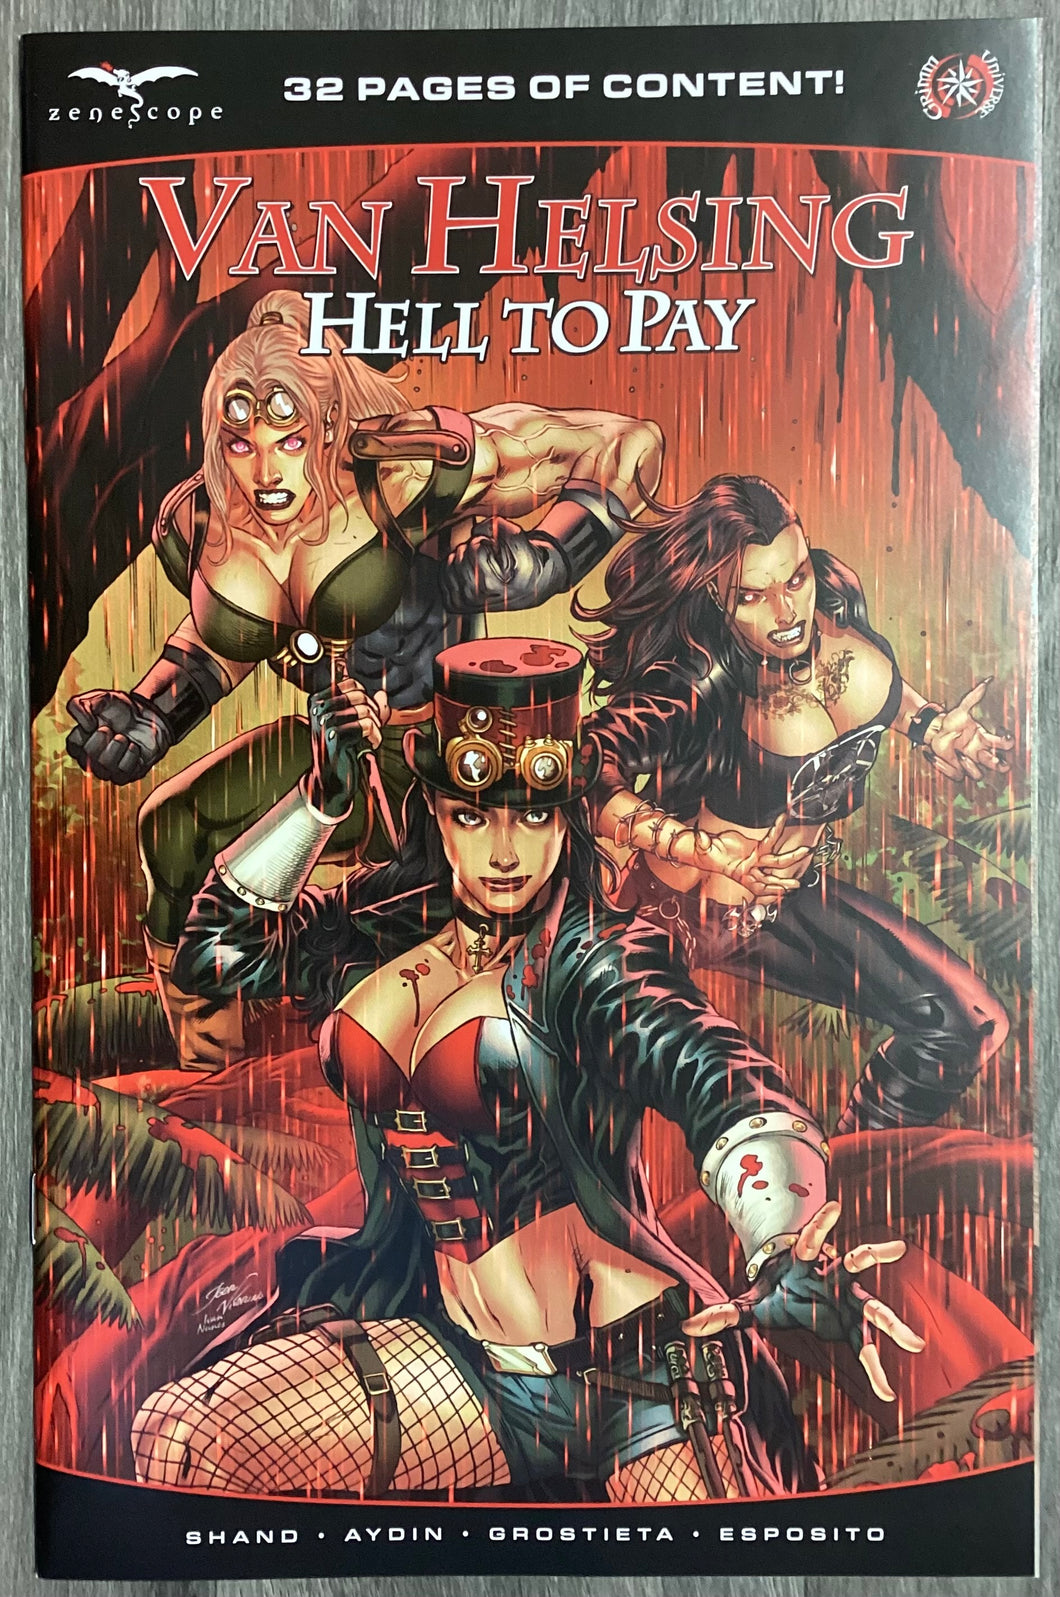 Van Helsing: Hell to Pay No. #1(A) Zenoscope Comics